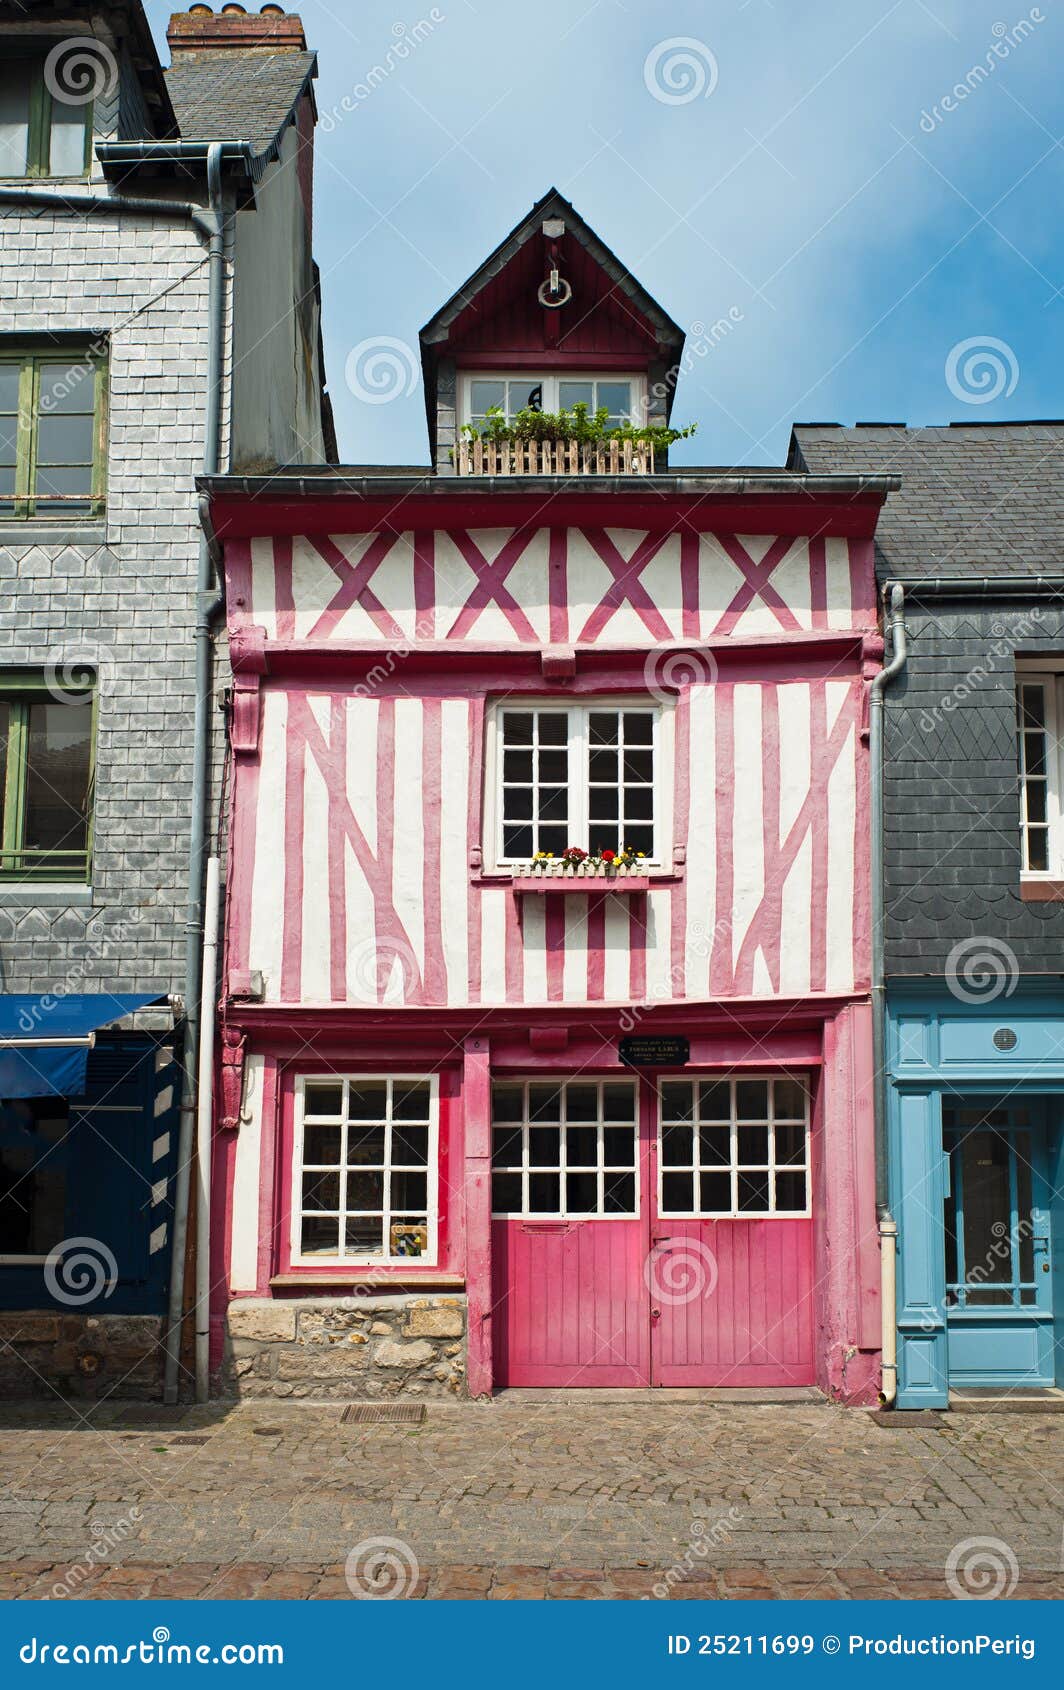 French house stock image. Image of idyllic, country, charming - 25211699